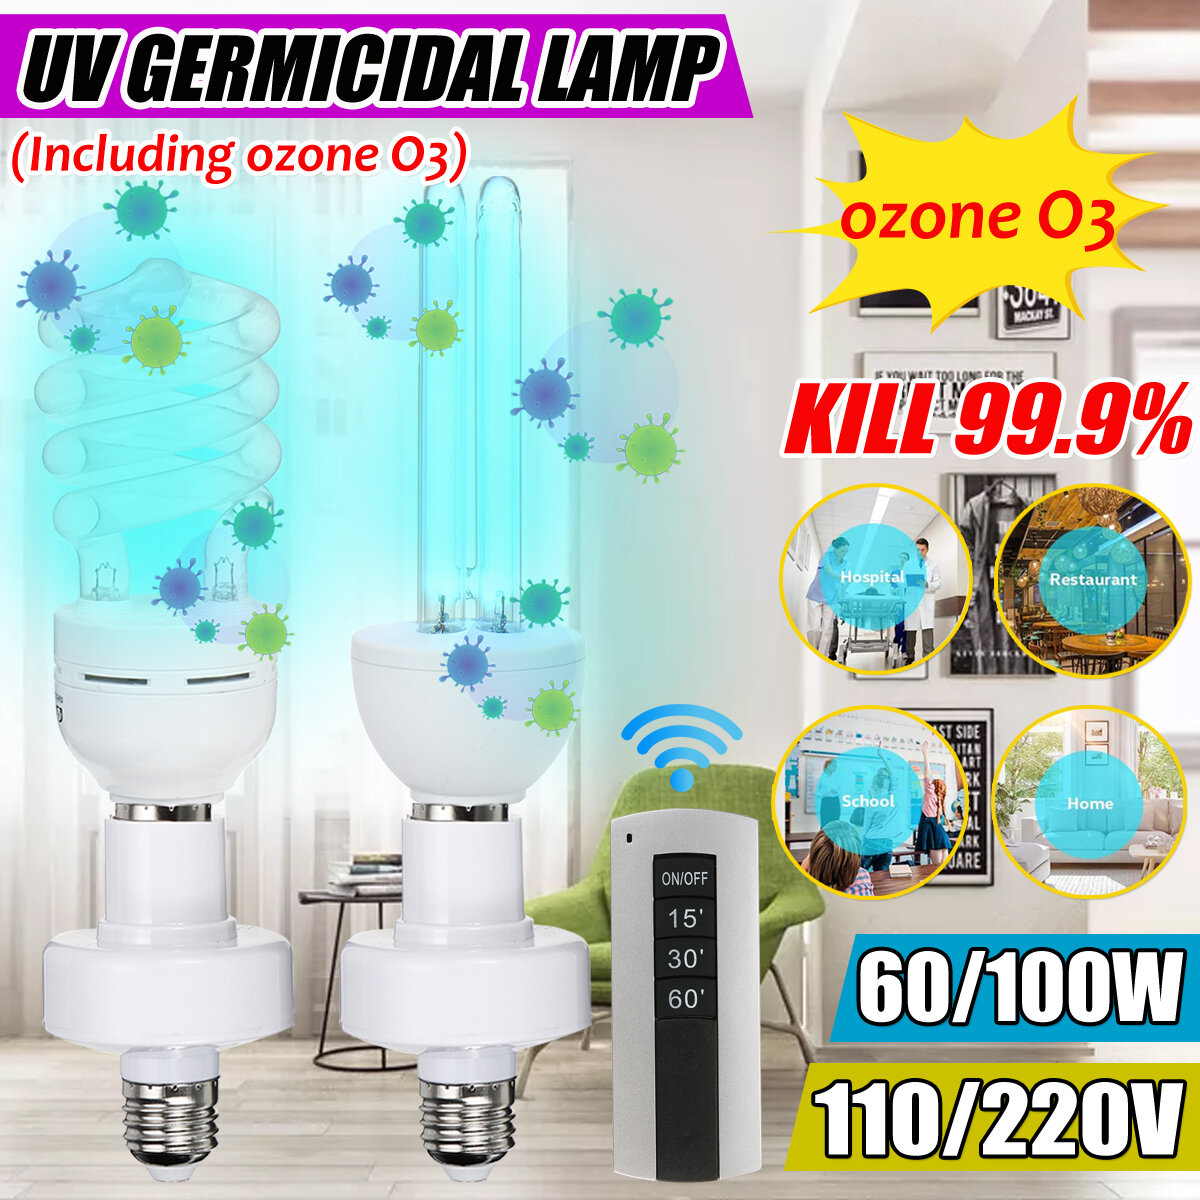 

60W 100W UV Germicidal Lamp E27 LED UVC Corn Bulb Home UV Sterilizing Disinfection Light + Lampholder + Socket 110V/220V